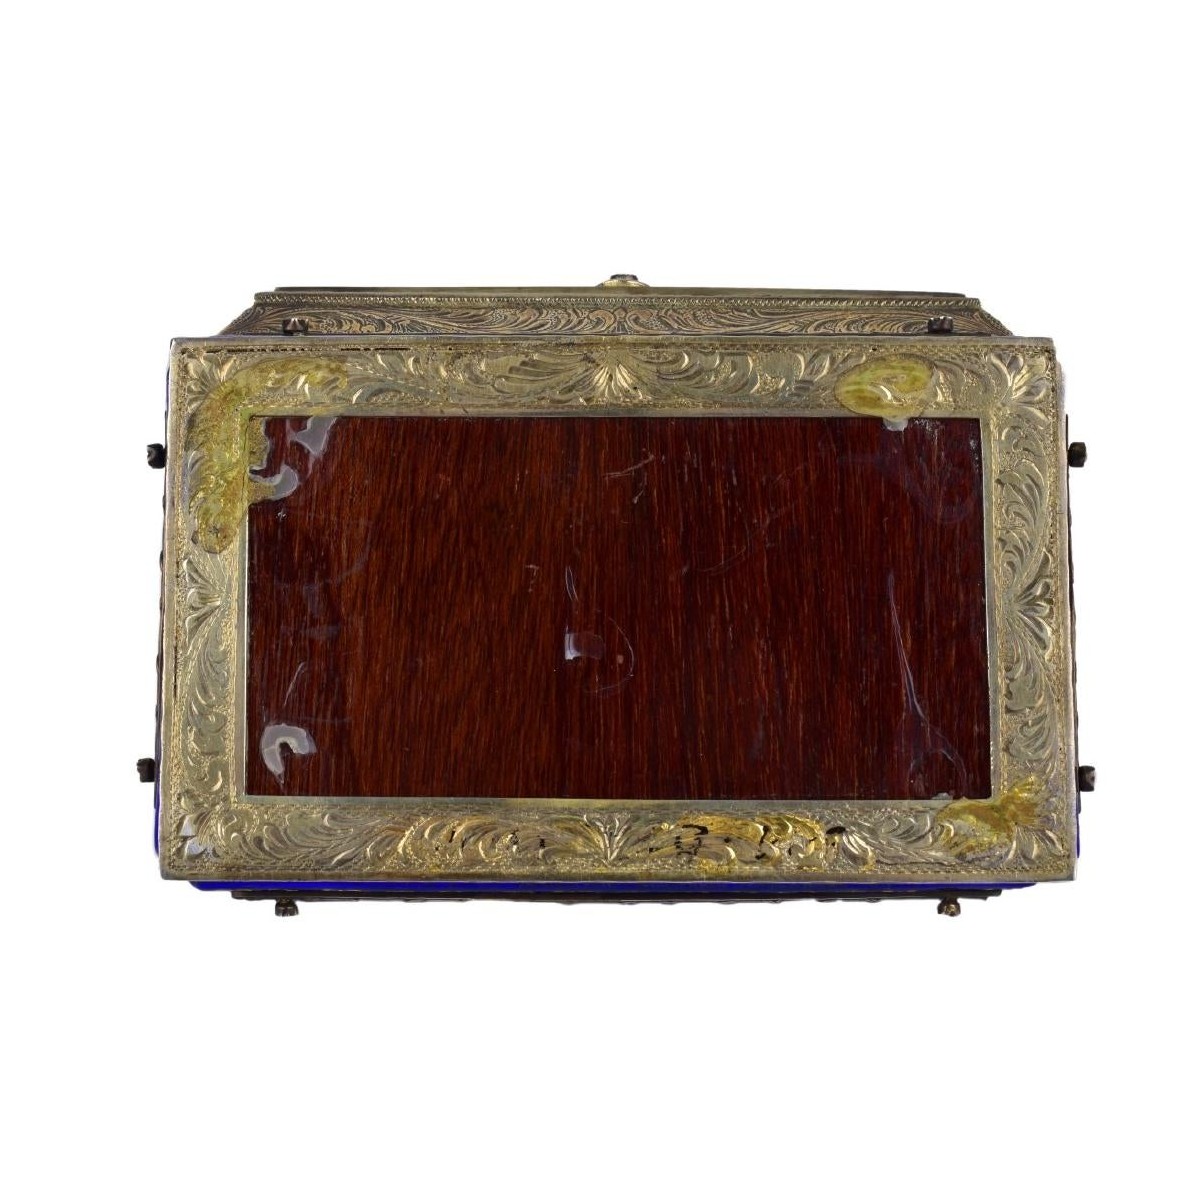 Antique Vienesse Silver and Enamel Box